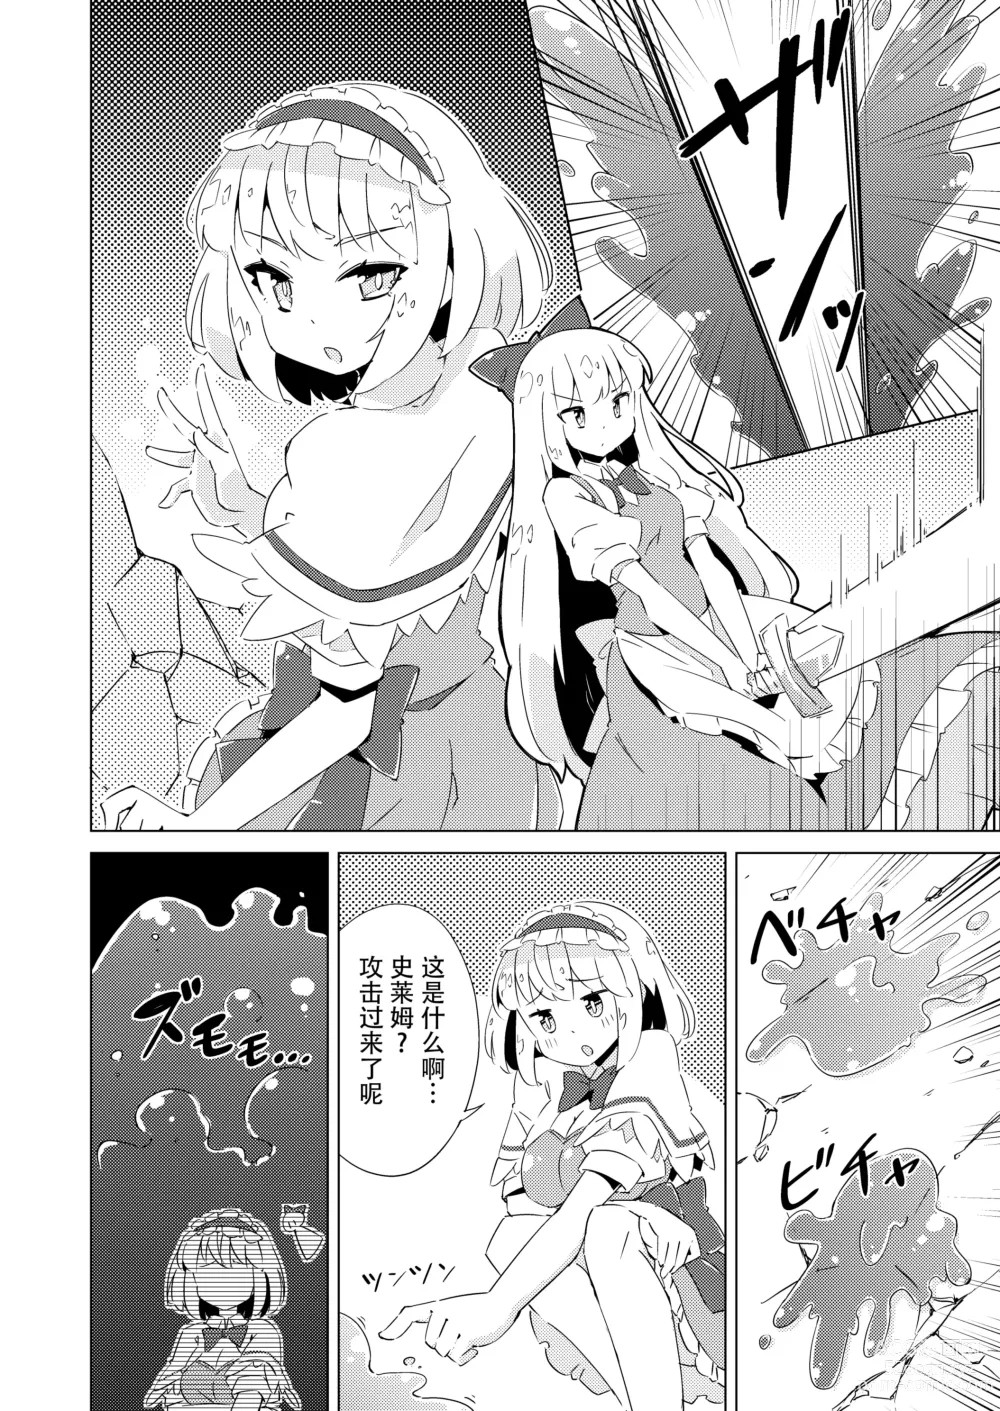 Page 3 of doujinshi Slime vs Alice